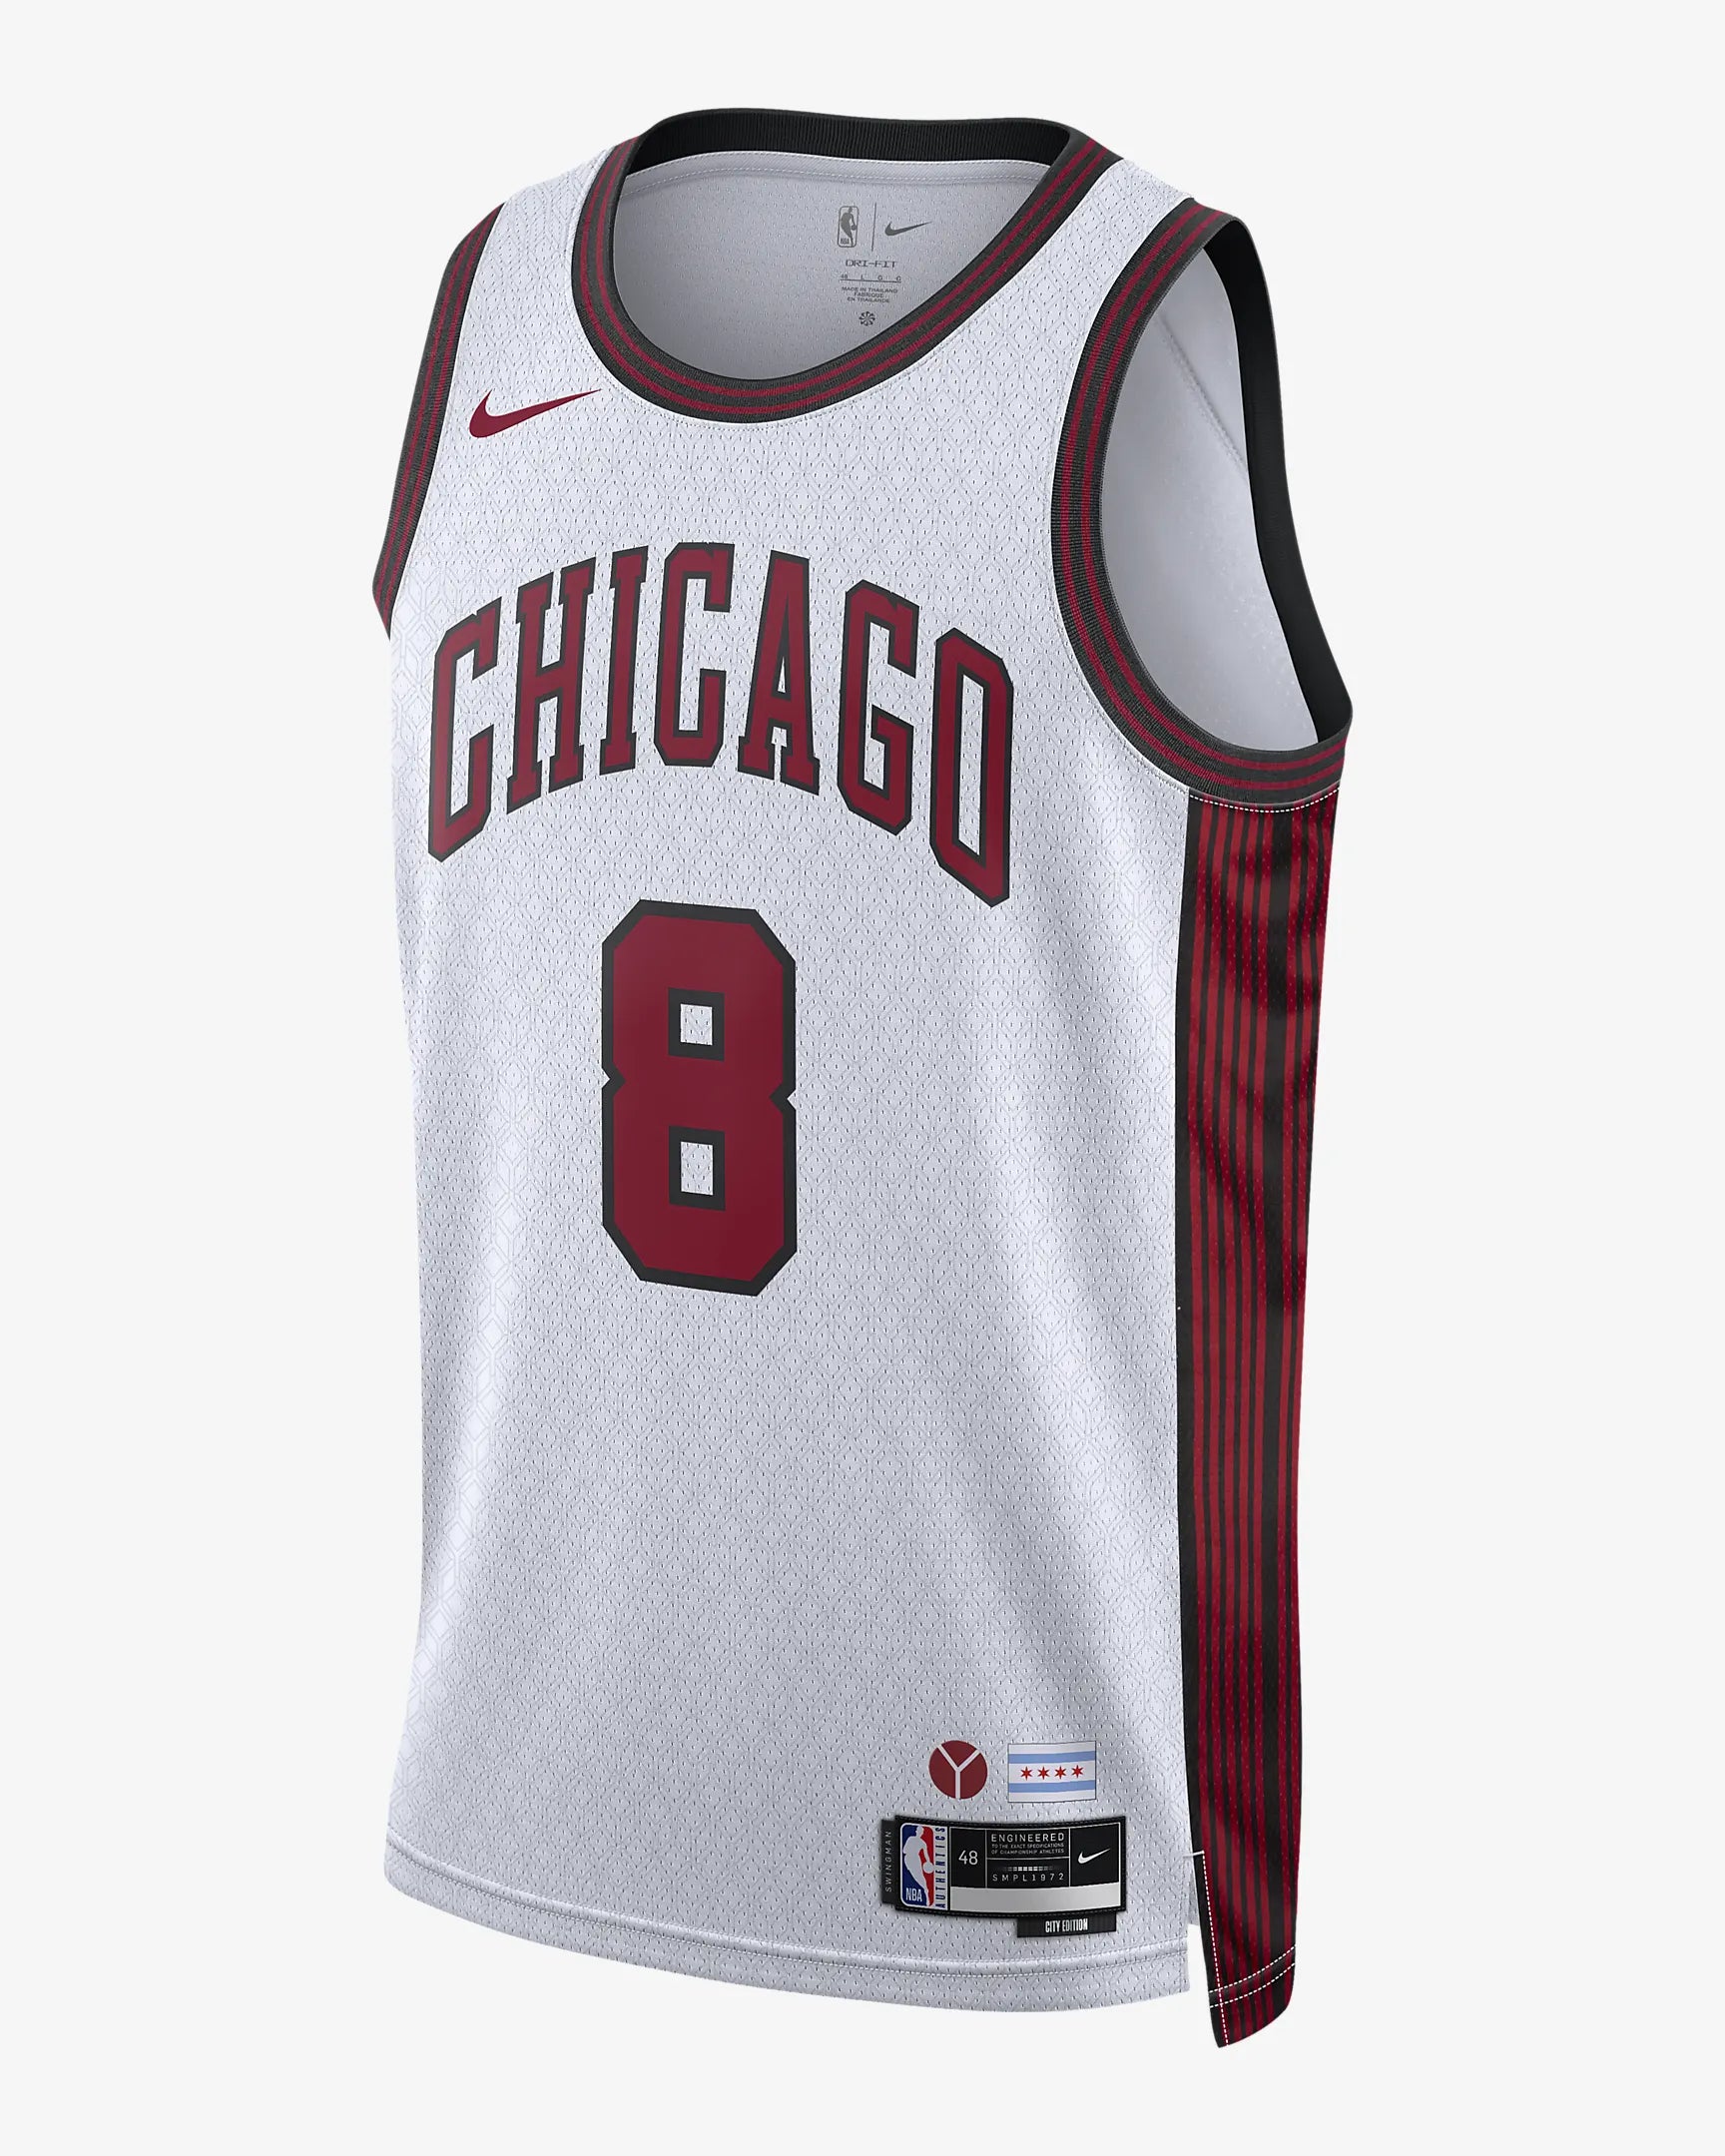 Zach LaVine Bulls Icon Edition Nike NBA Authentic Jersey.